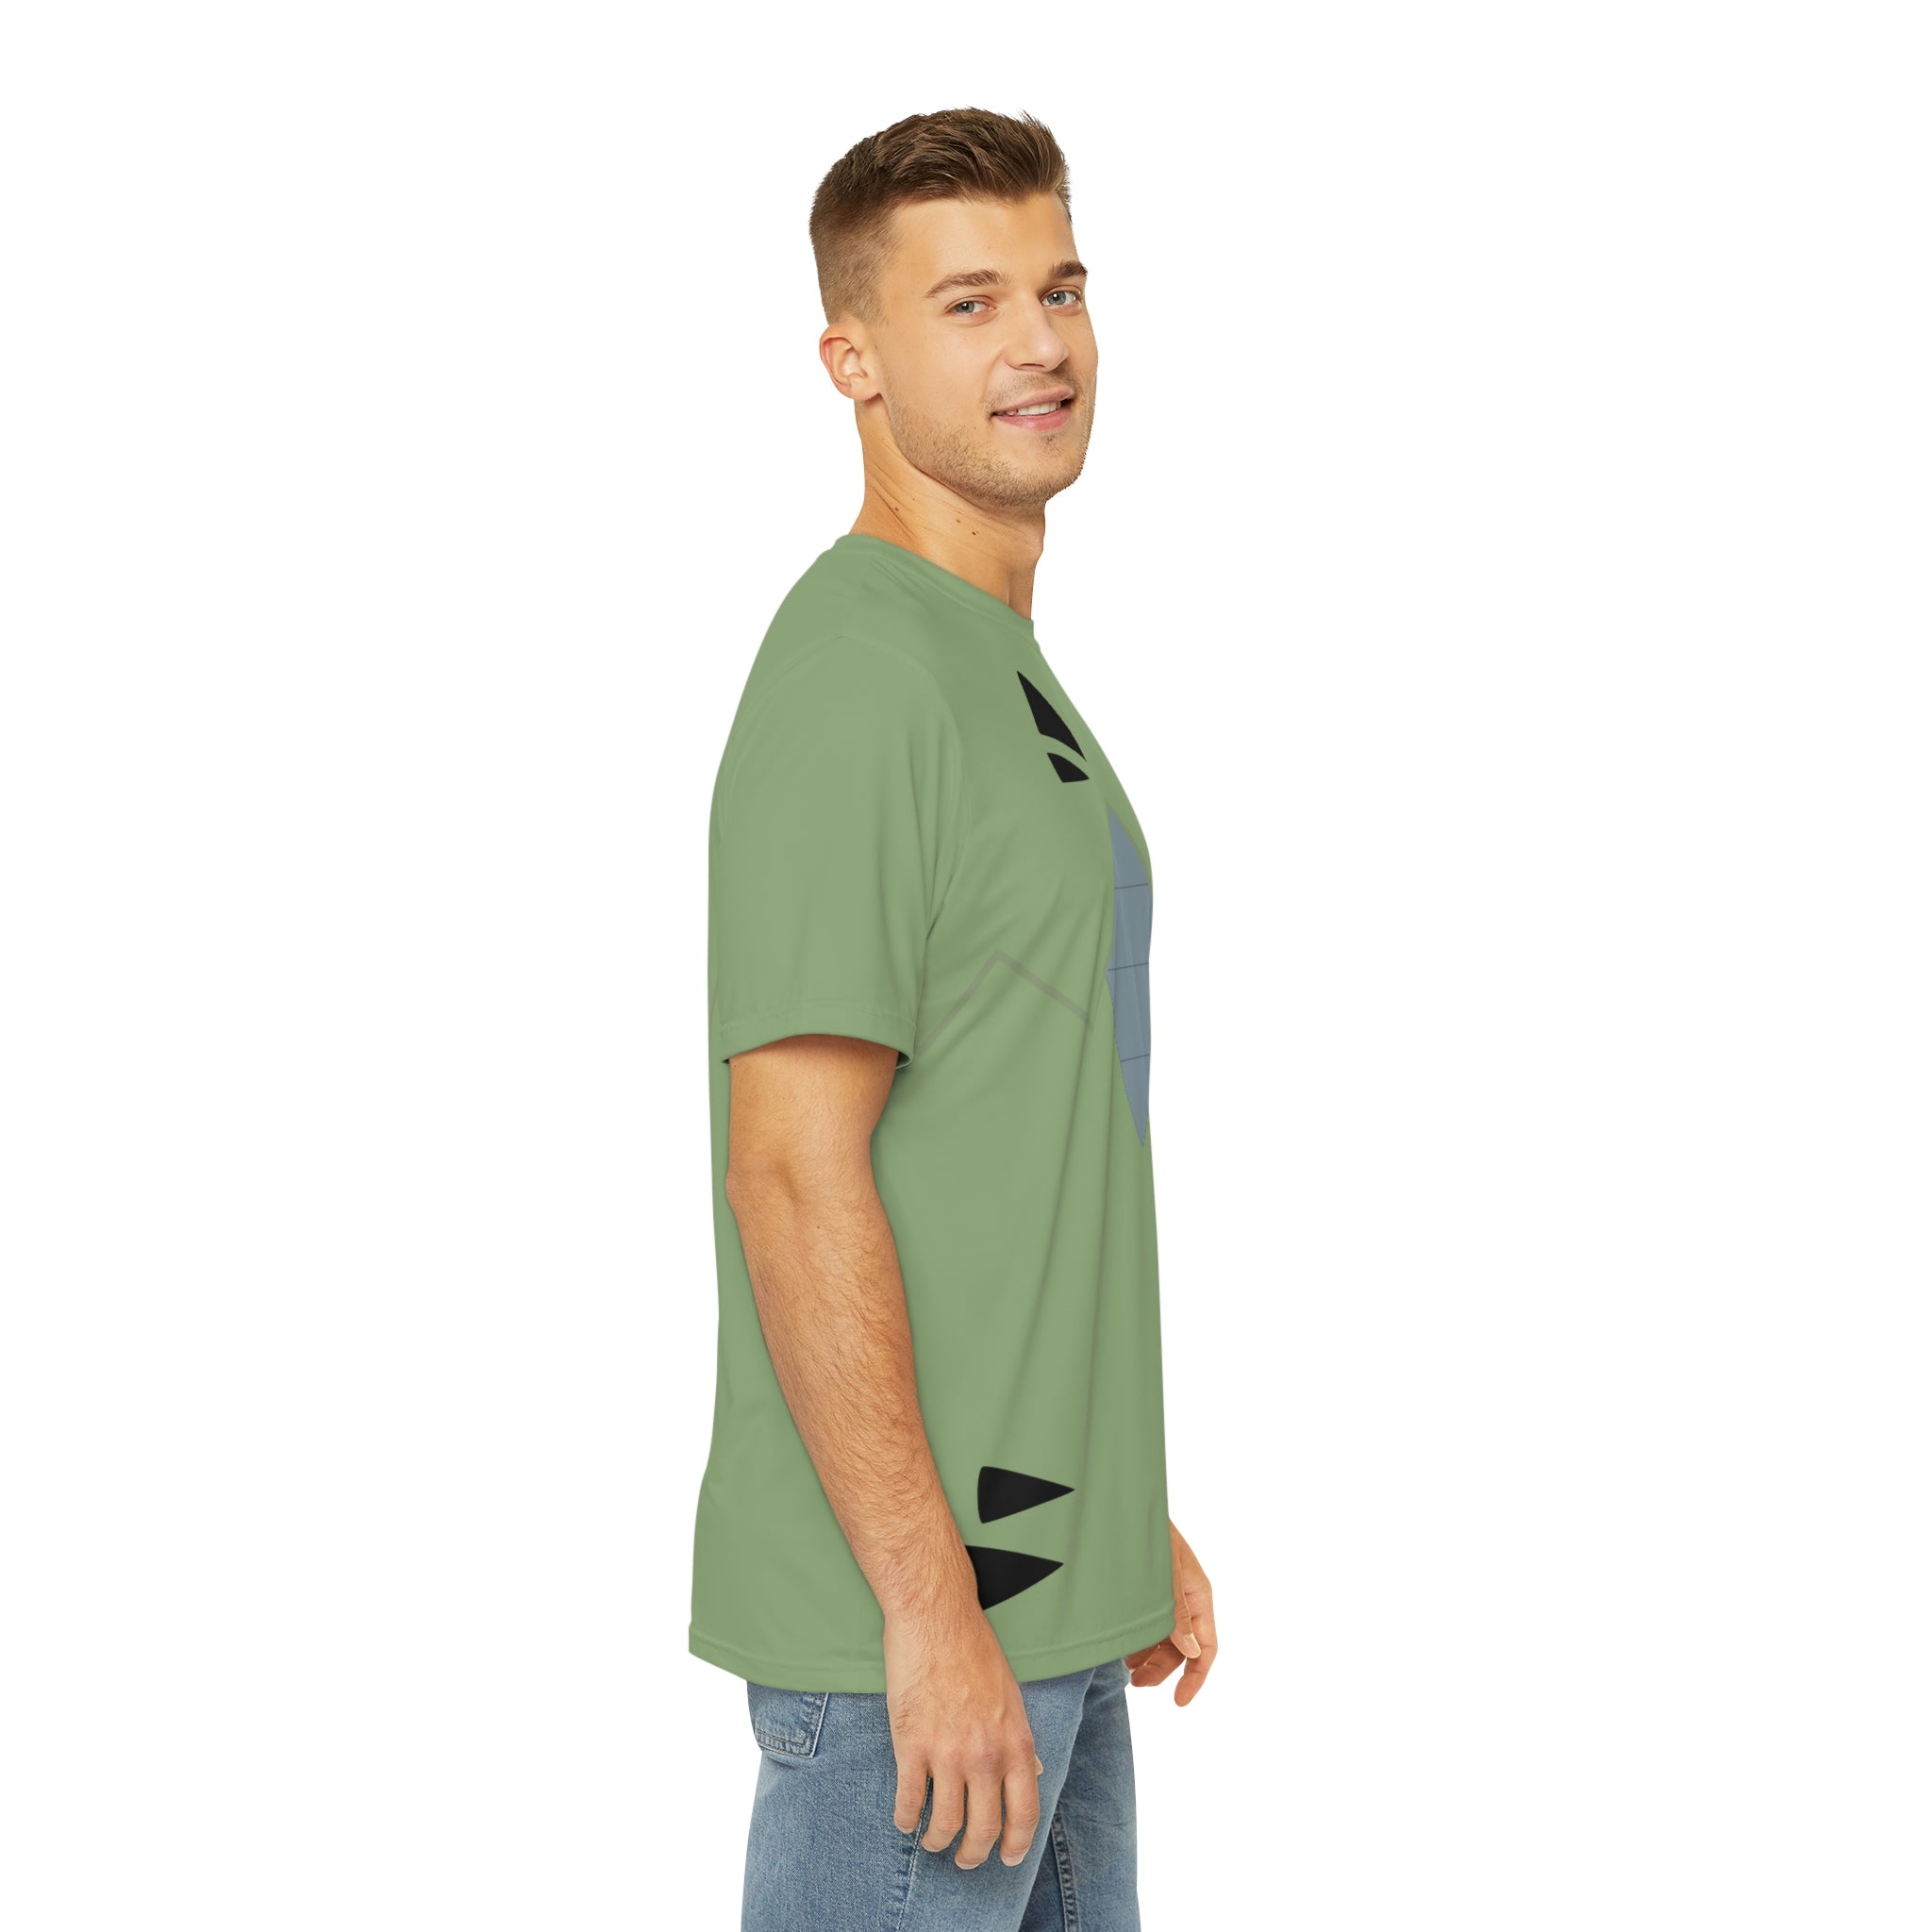 PKMN inspired Short Sleeve Shirt